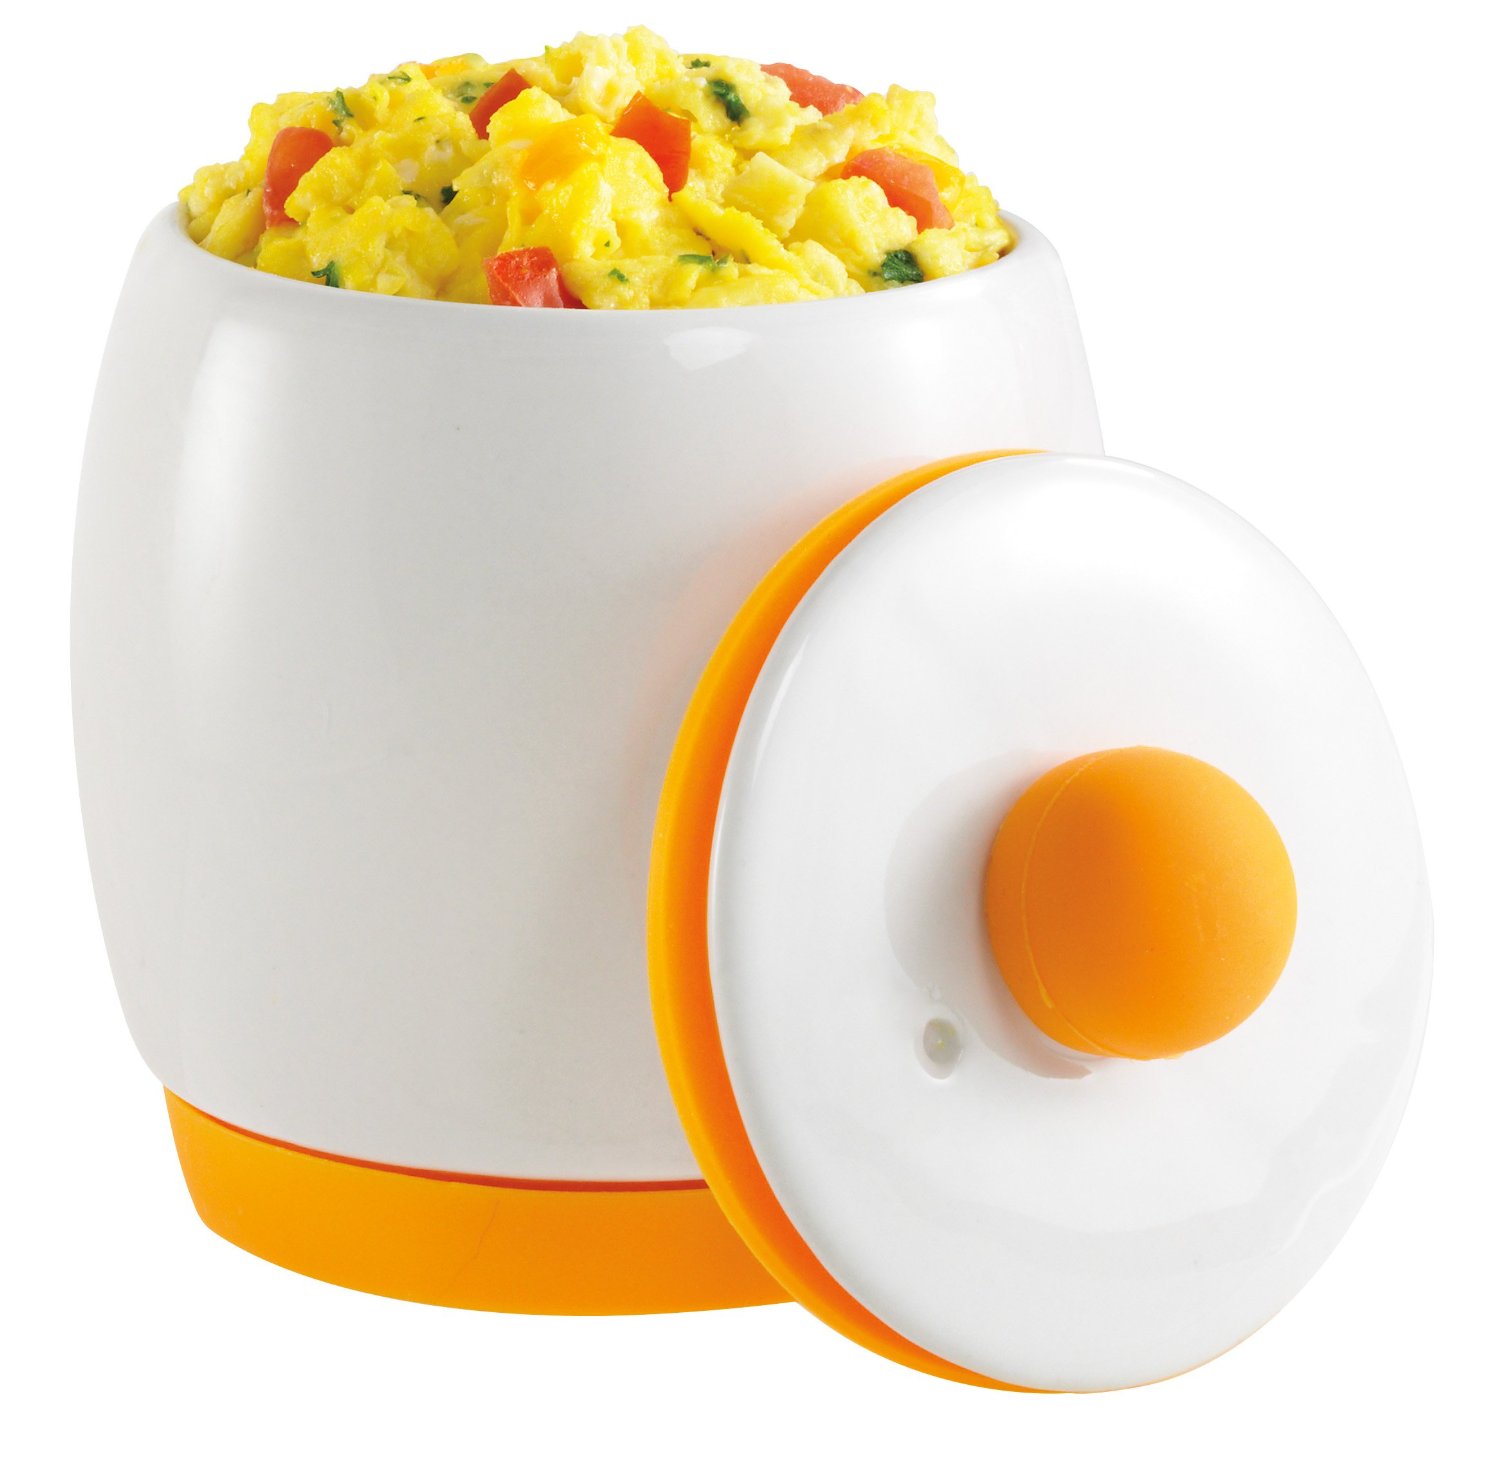 Eggtastic microwave egg coocker